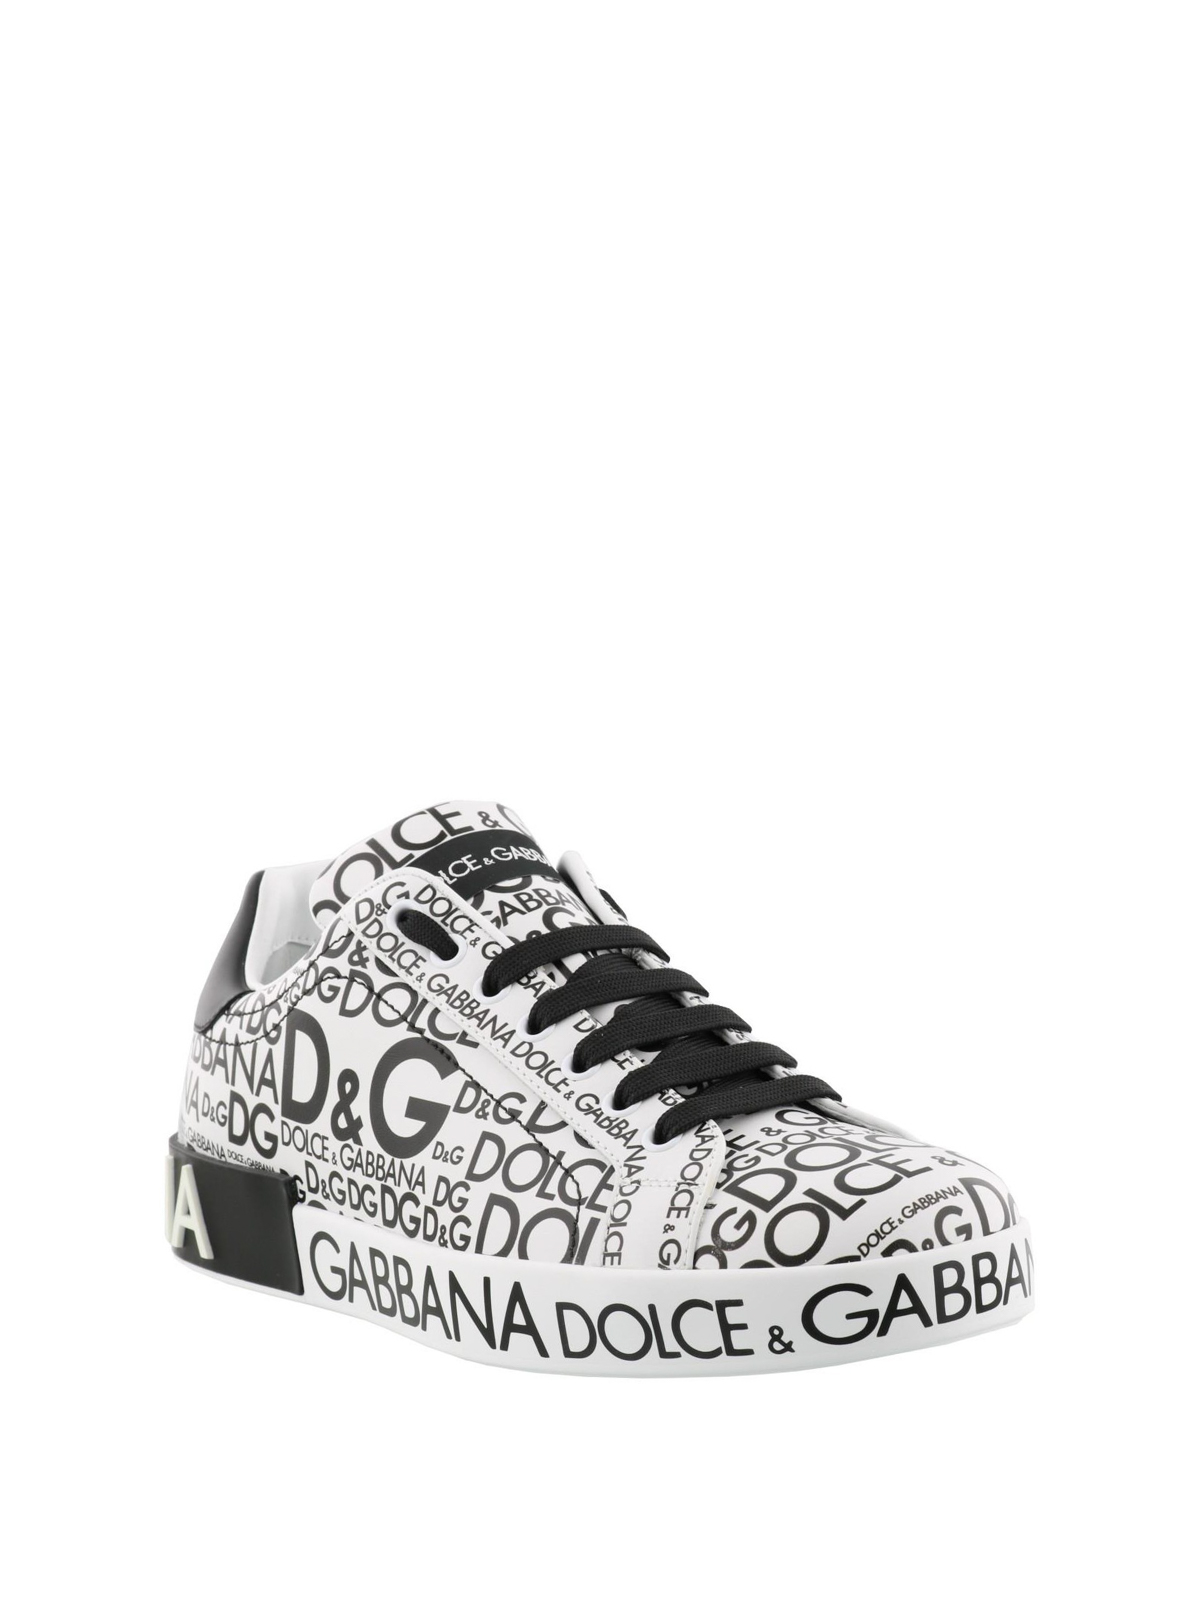 Dolce \u0026 Gabbana - All over logo leather 